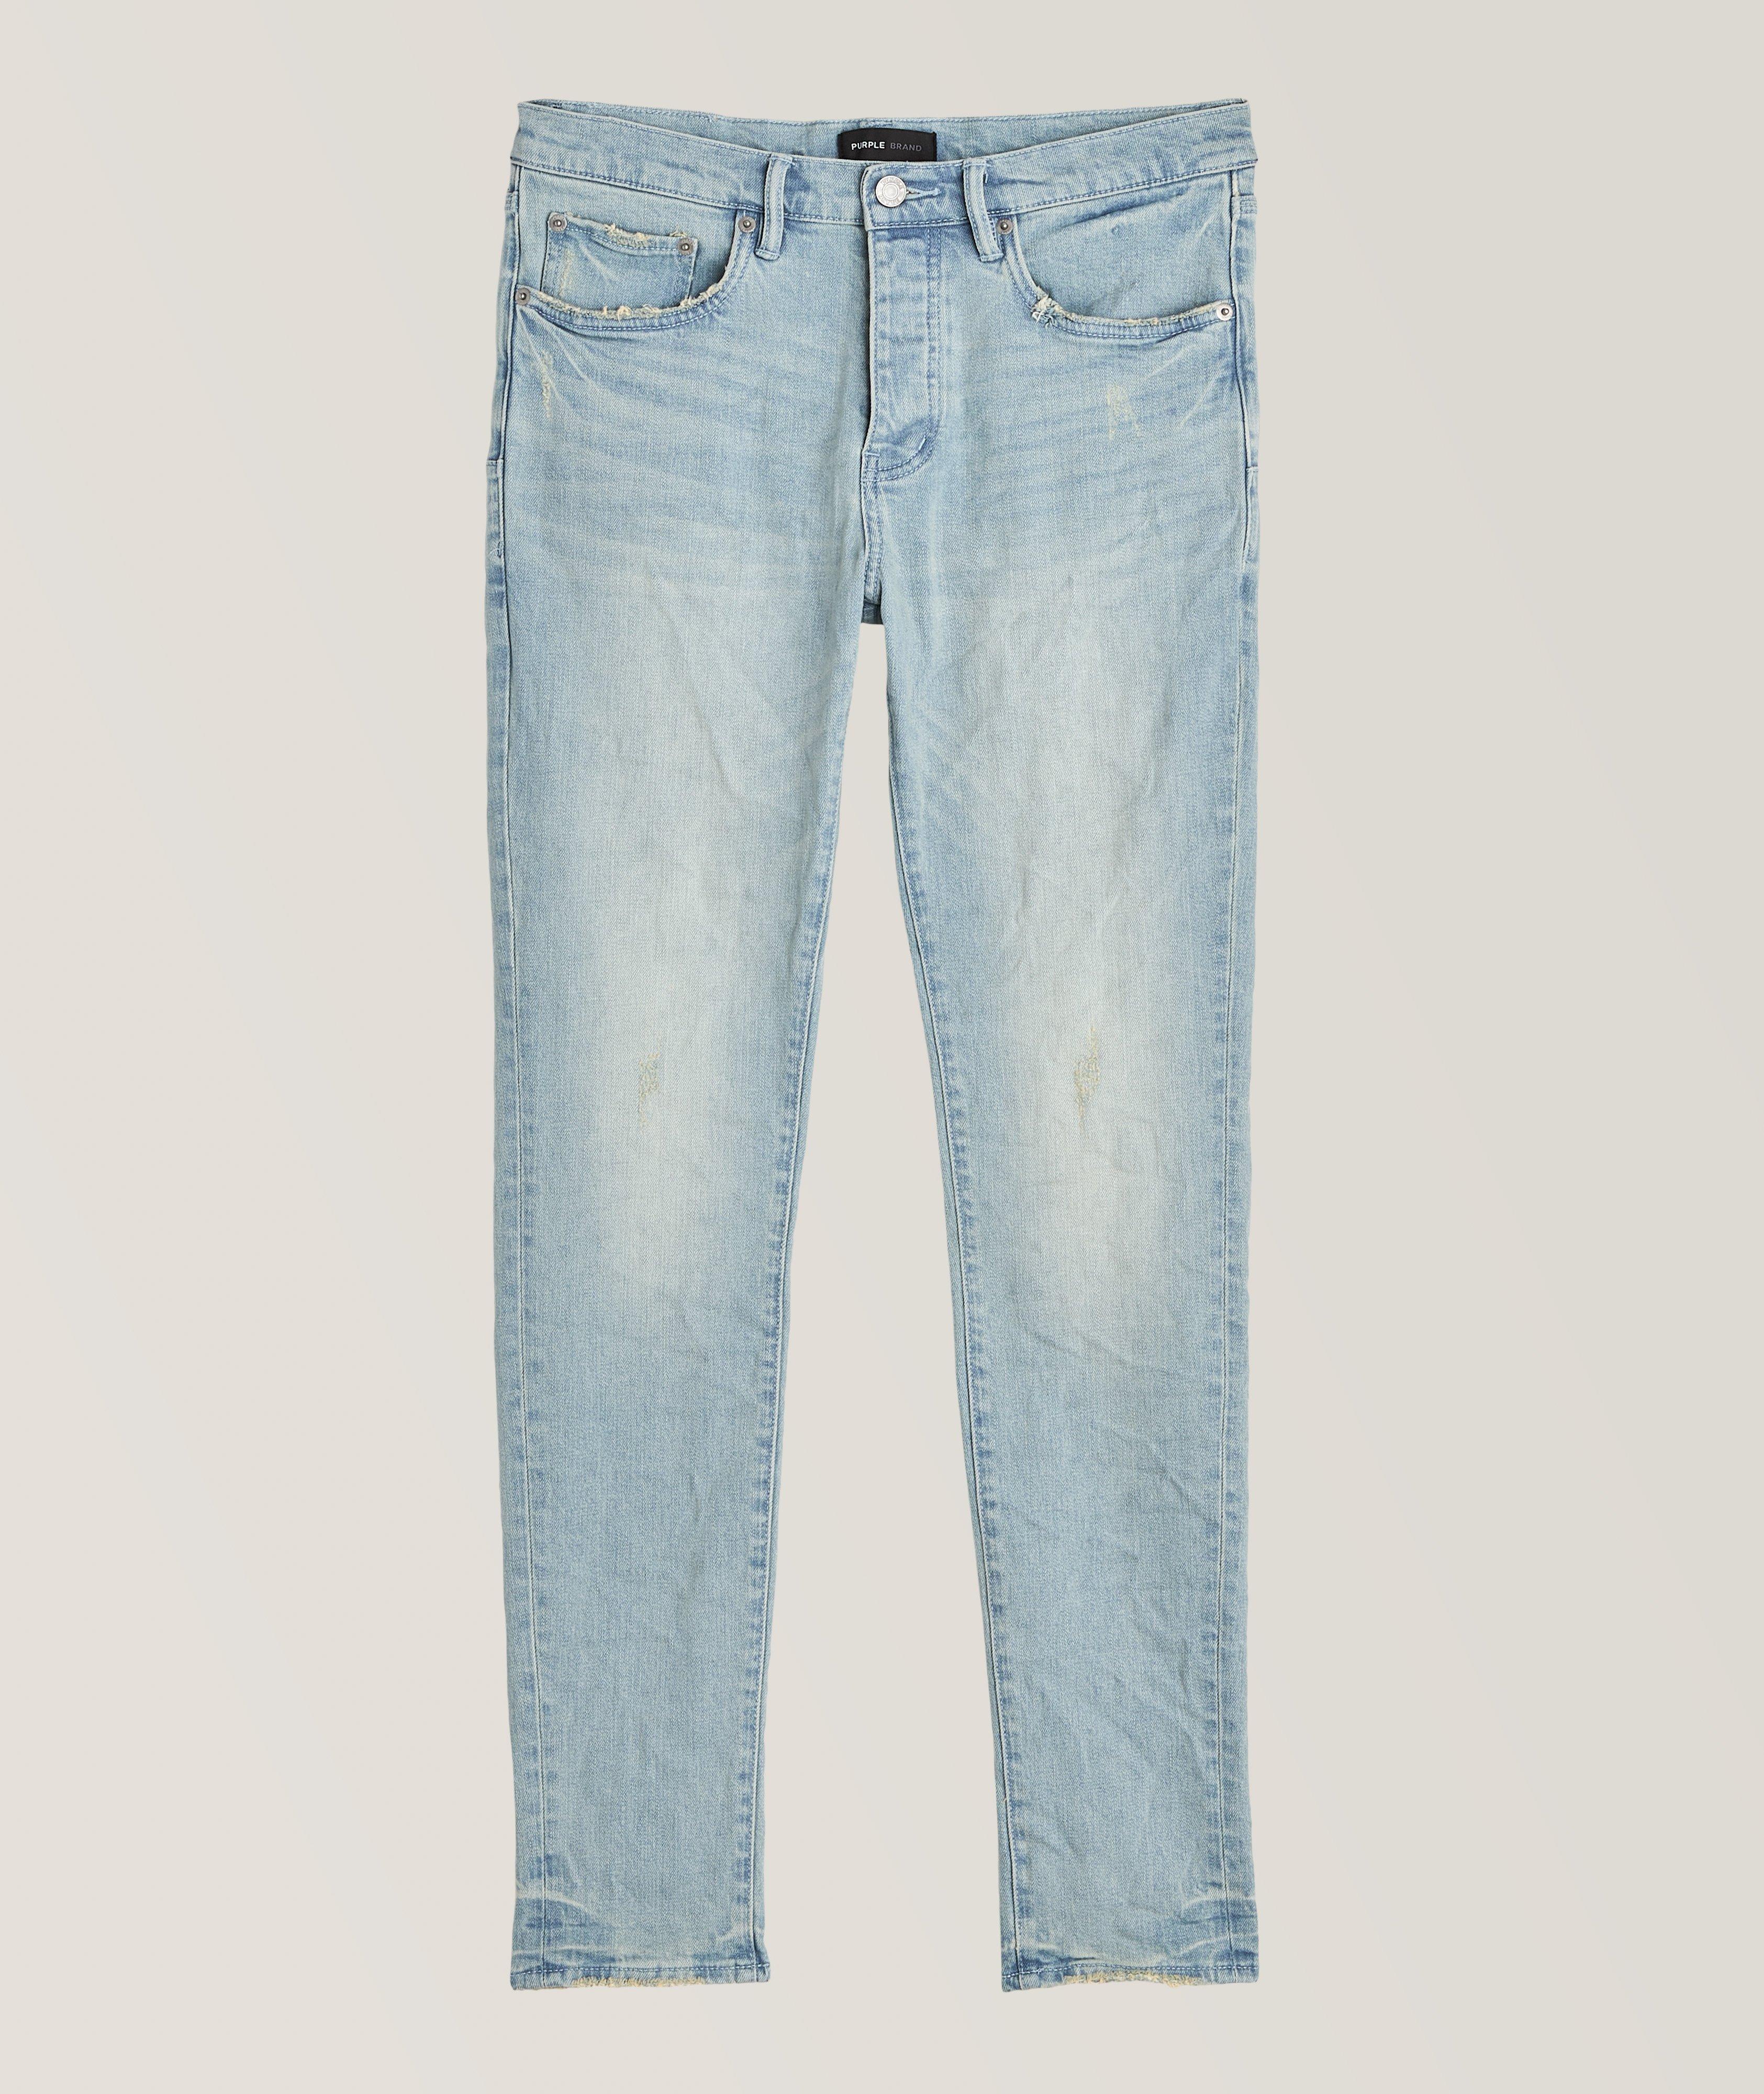 Retro 80s Tint Stretch-Cotton Jeans image 0